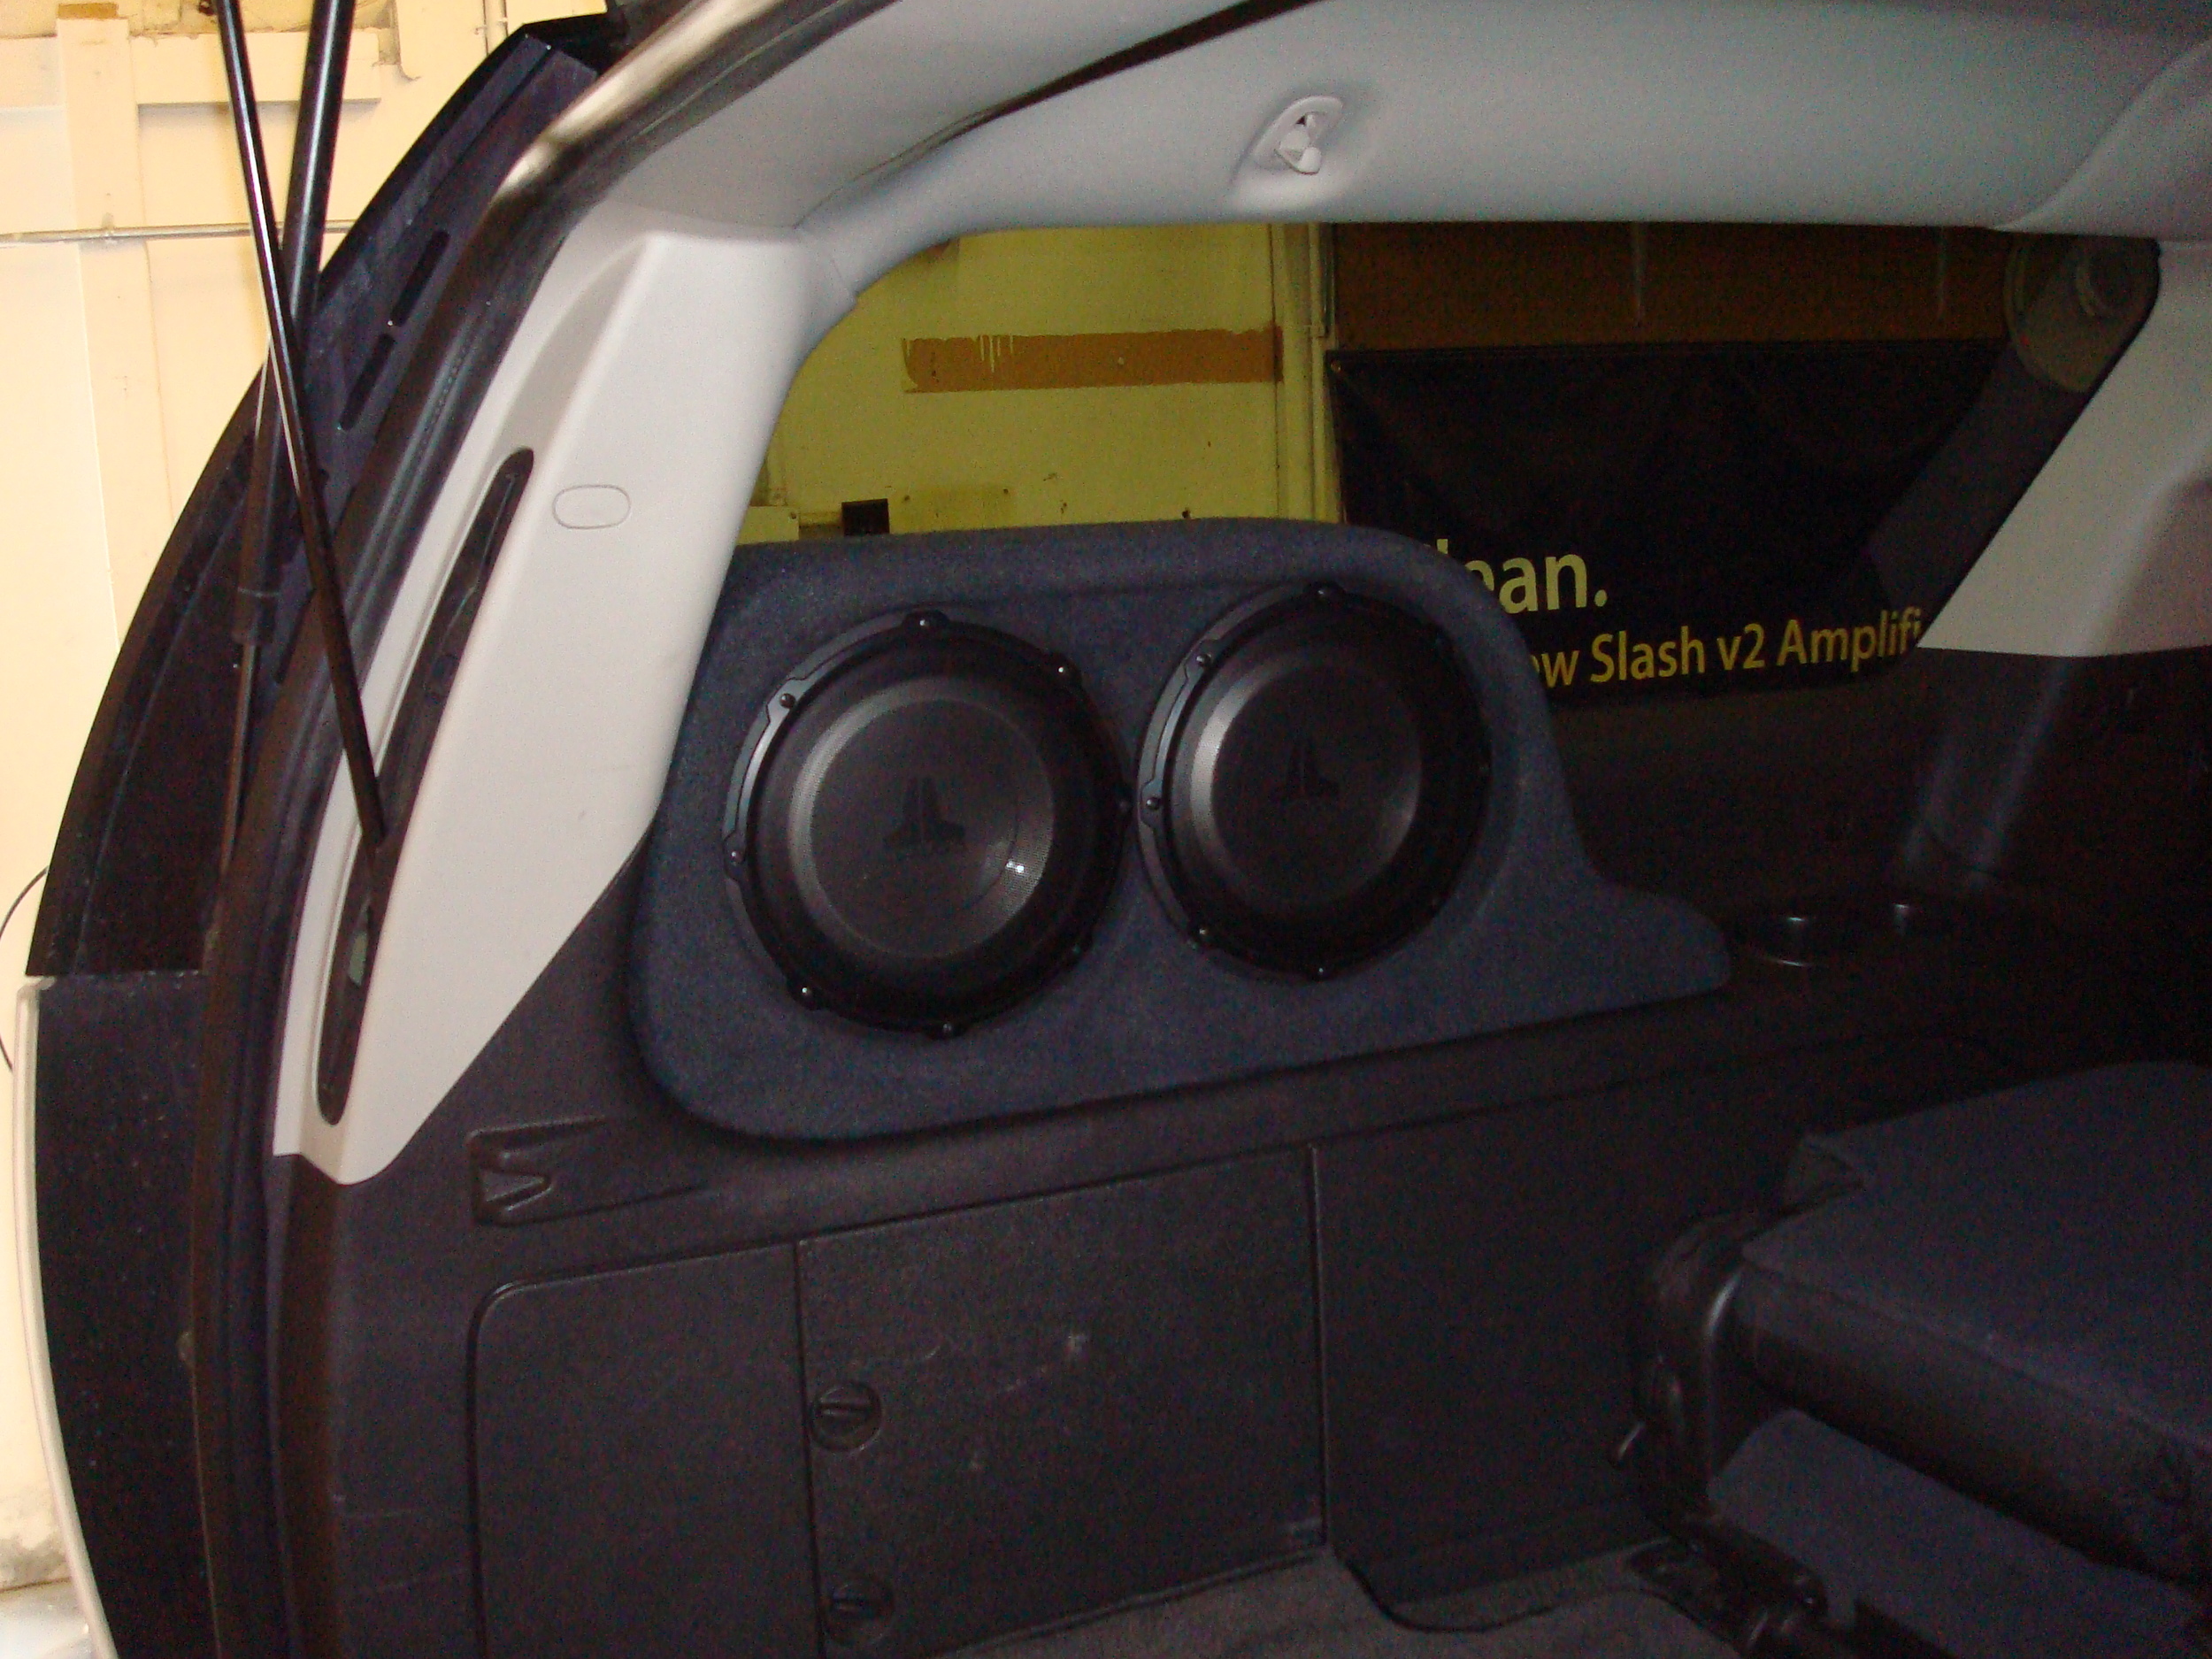 2007 Yukon Denali XL - JL Audio Stealthbox with (2) 10W1 subs.  Keeps the entire cargo area free.